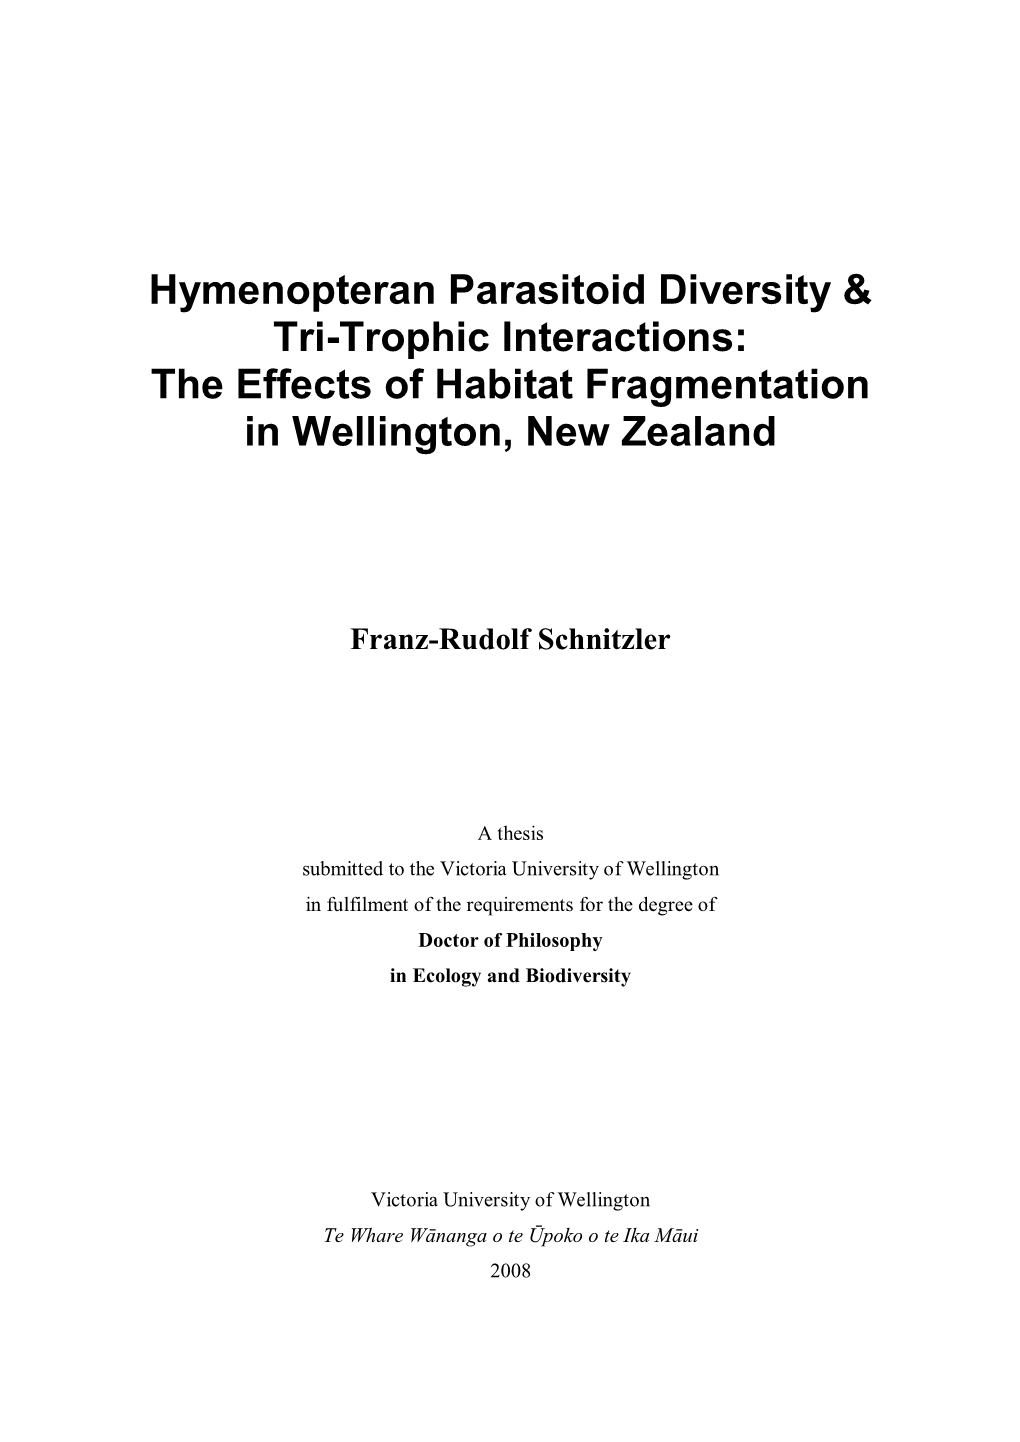 Hymenopteran Parasitoid Diversity & Tri-Trophic Interactions